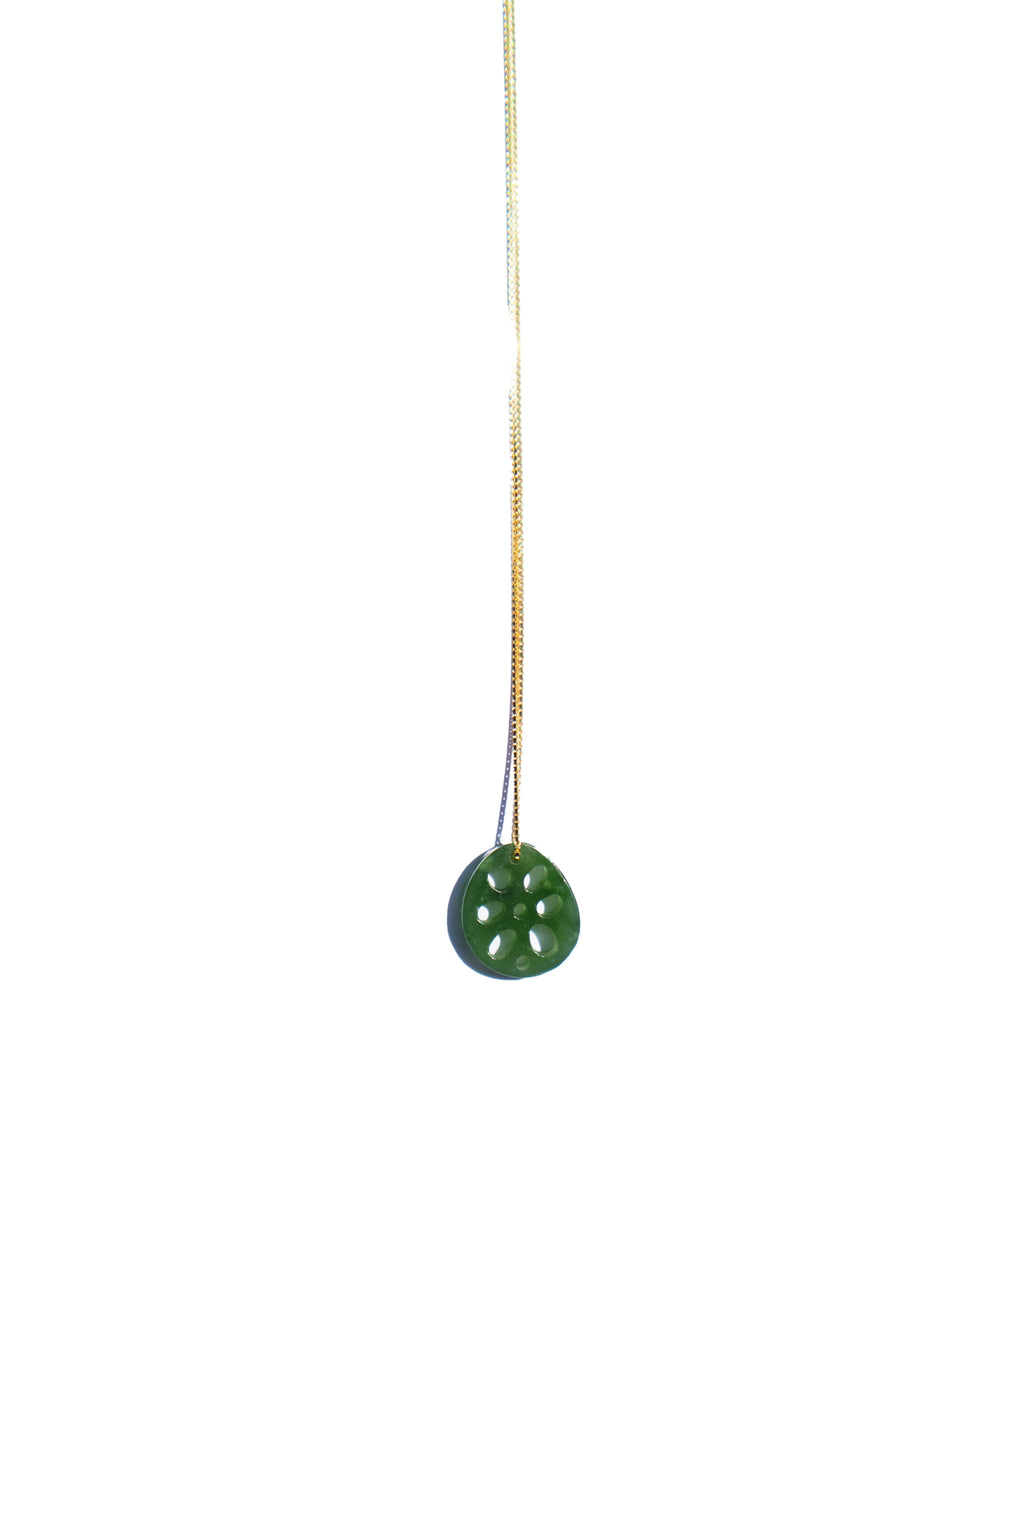 Lotus root jade pendant necklace